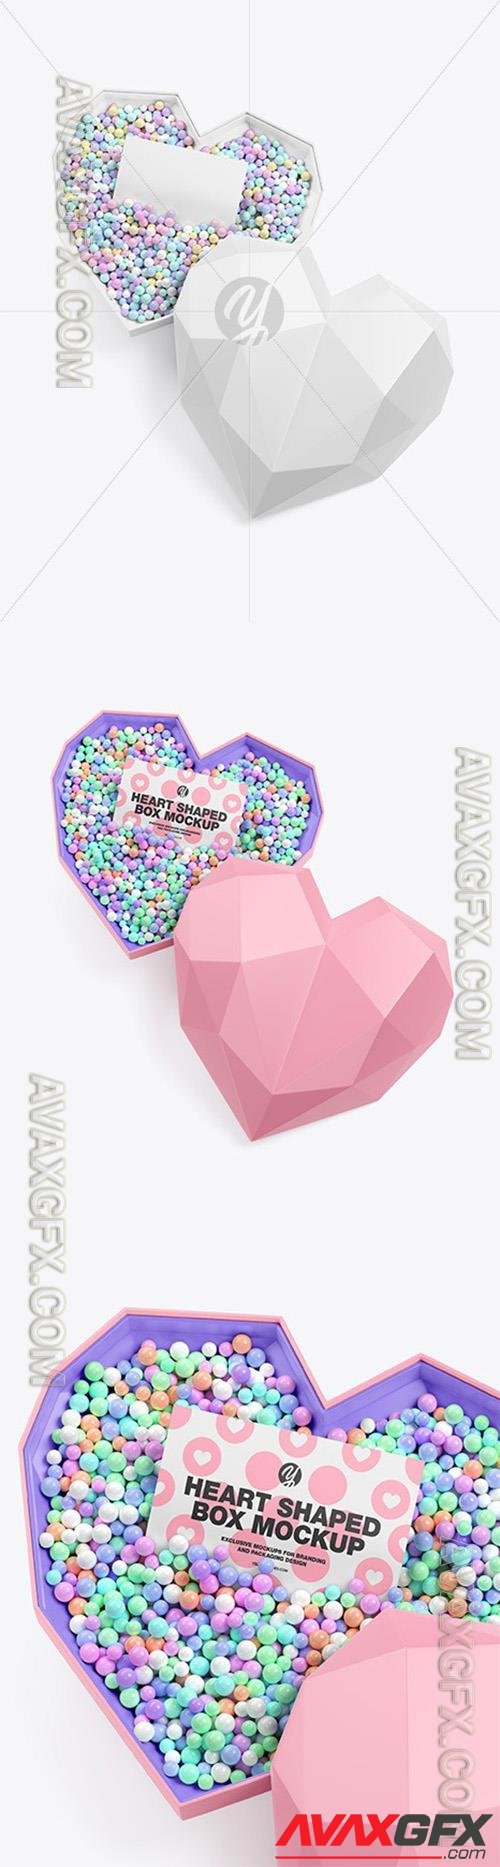 Heart Shaped Box with Card Mockup 97196 TIF